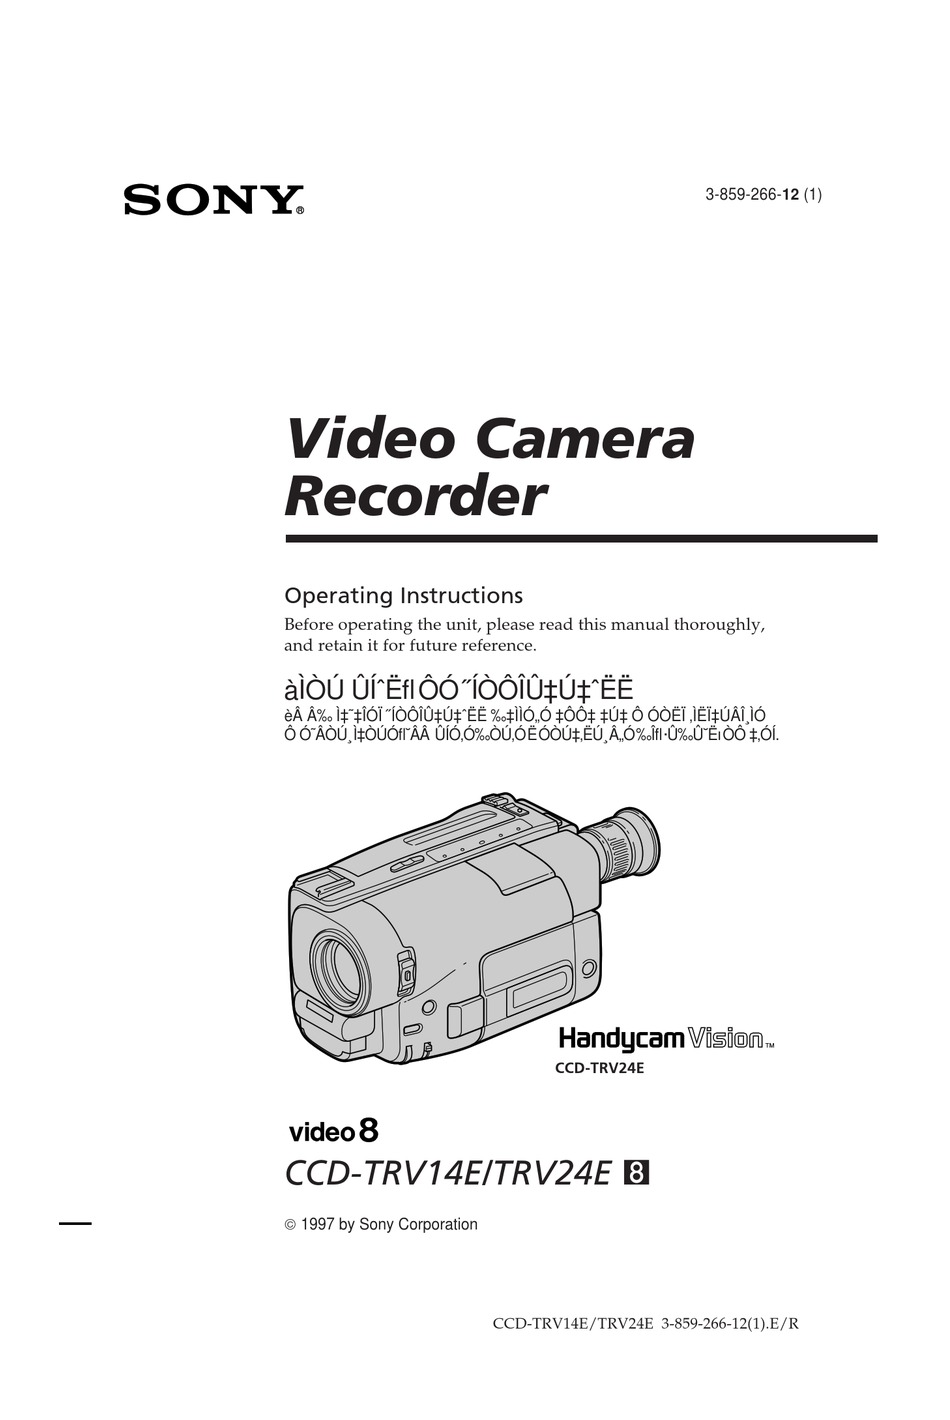 Sony Handycam Vision Ccd Trv14e Operating Instructions Manual Pdf Download Manualslib